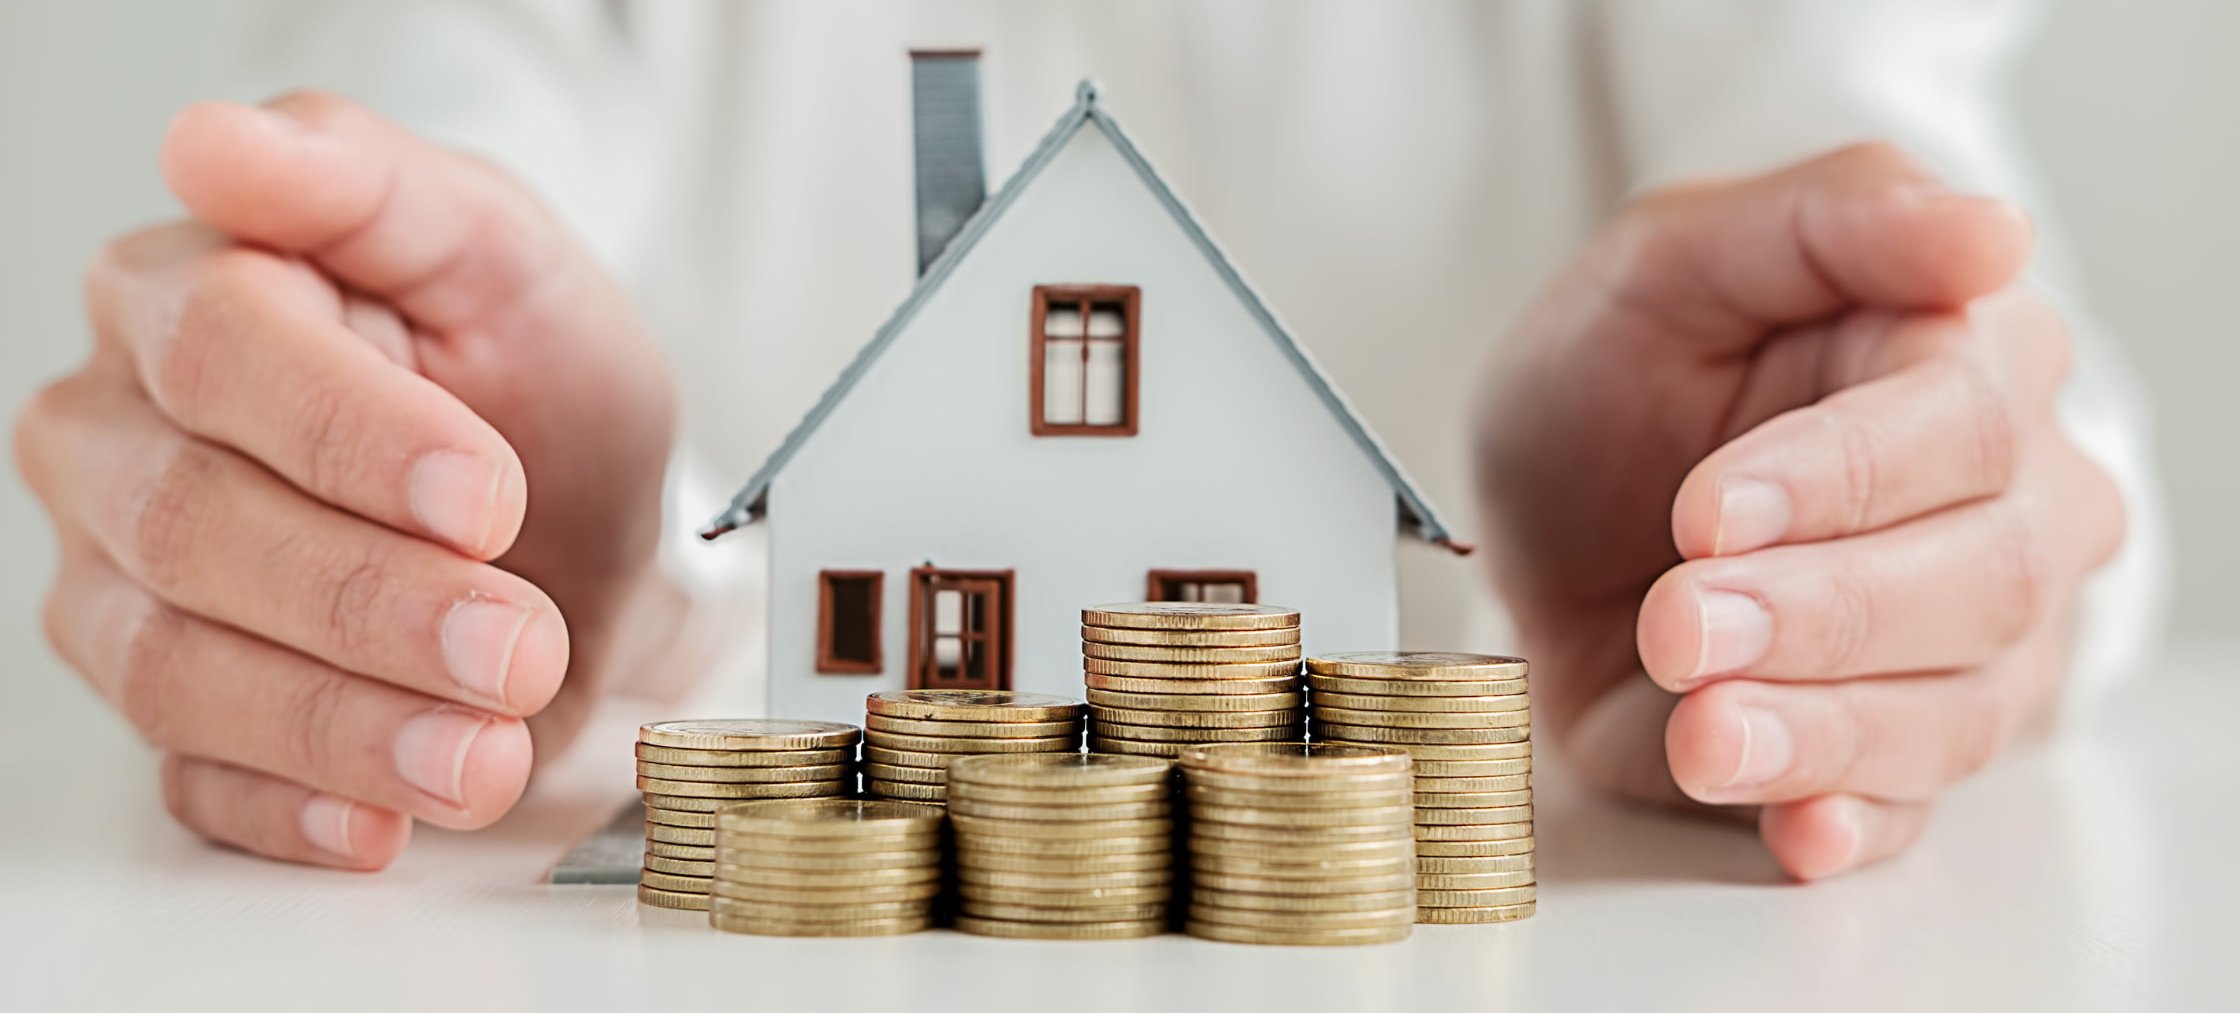 Dalende rente hypotheek nieuwbouw